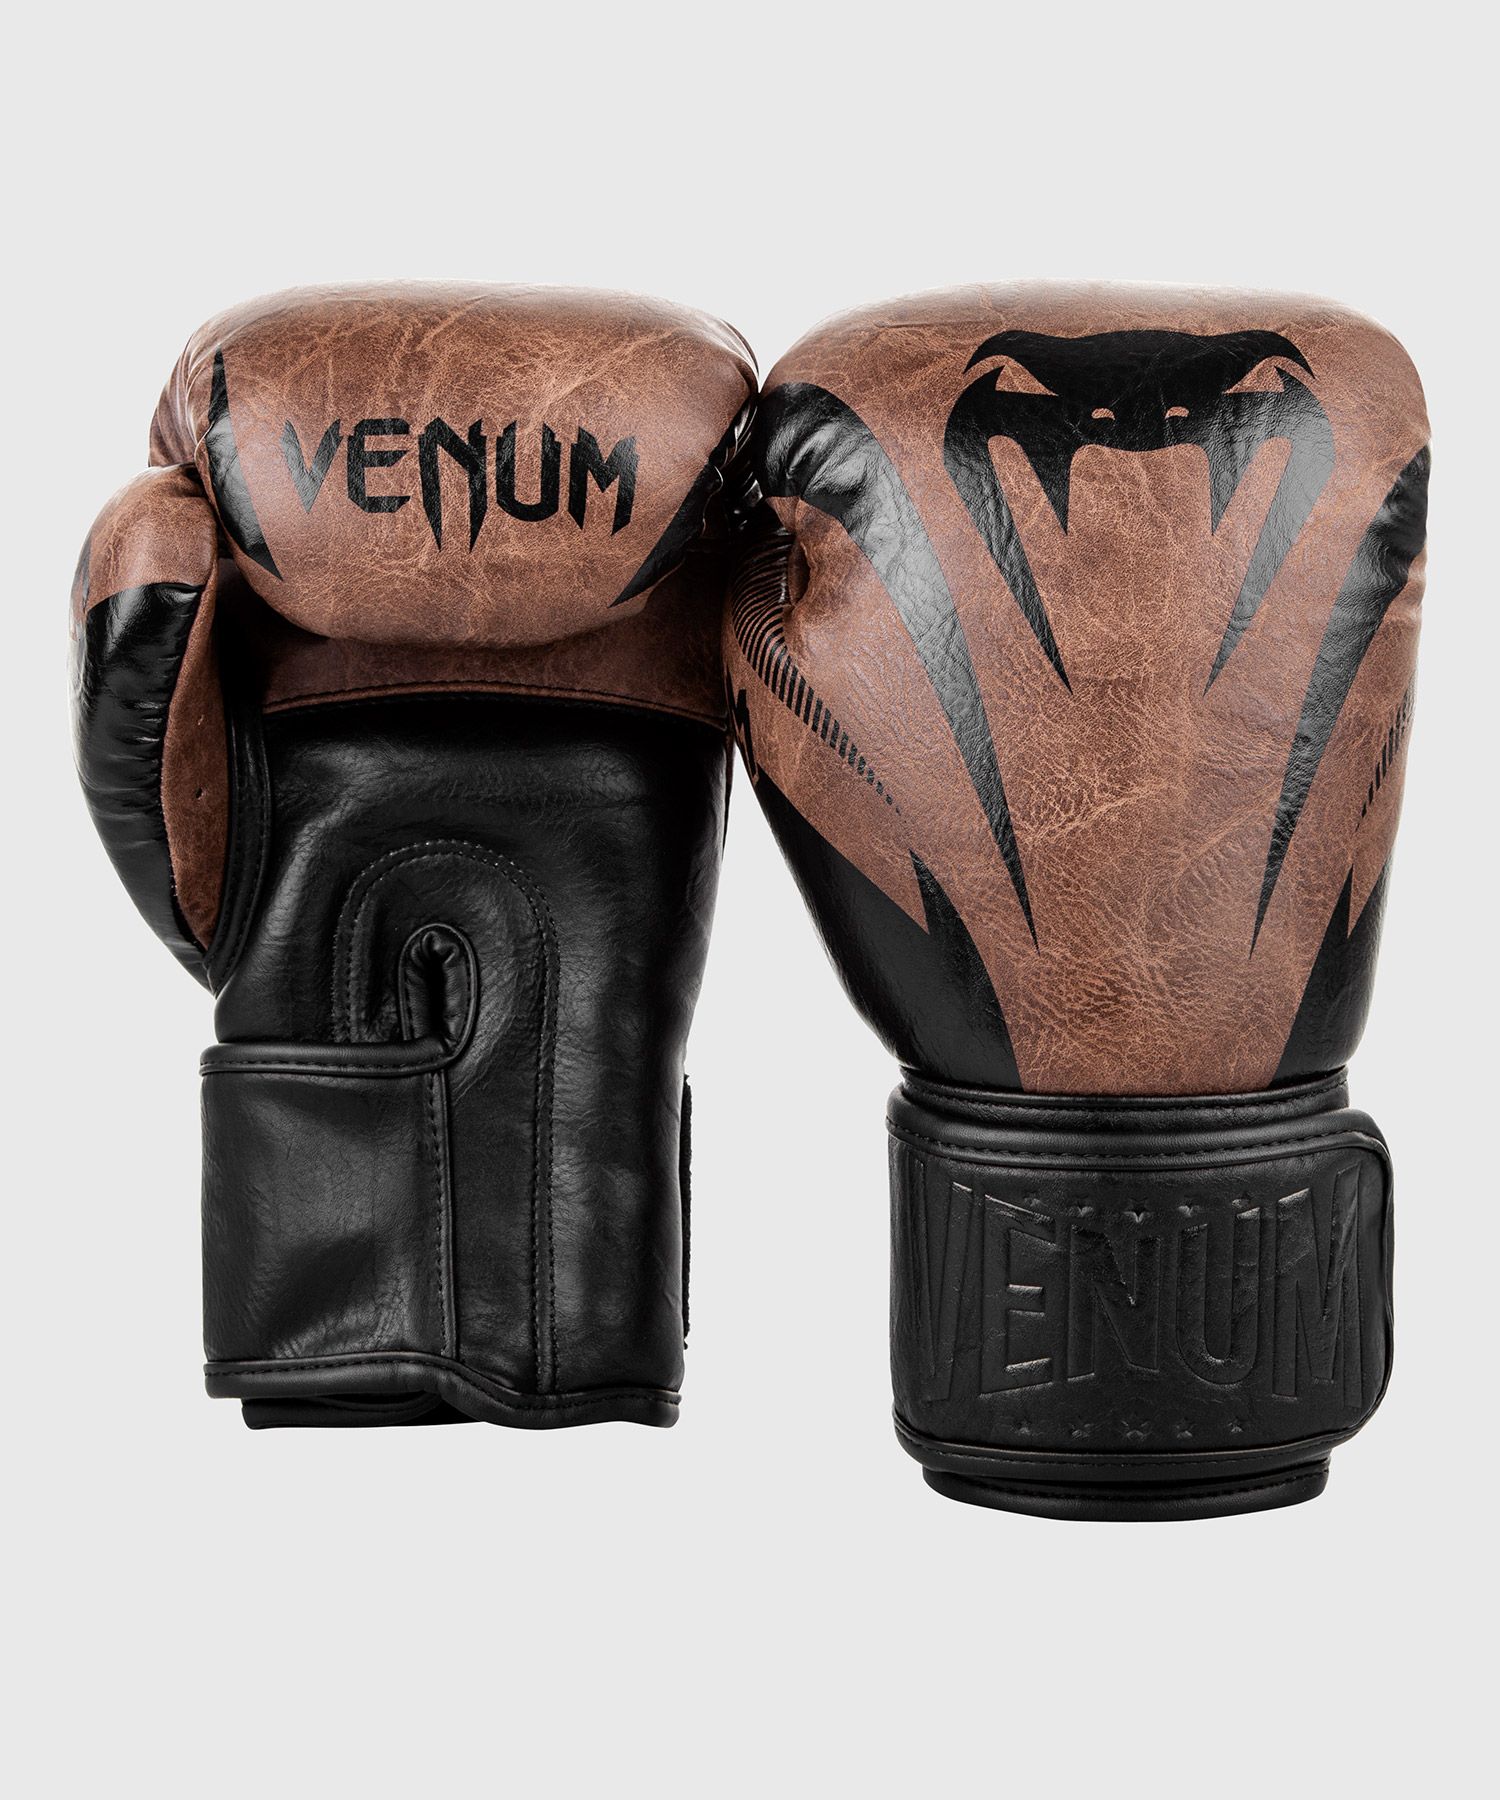 Venum Impact Boxhandschuhe - Schwarz/Braun